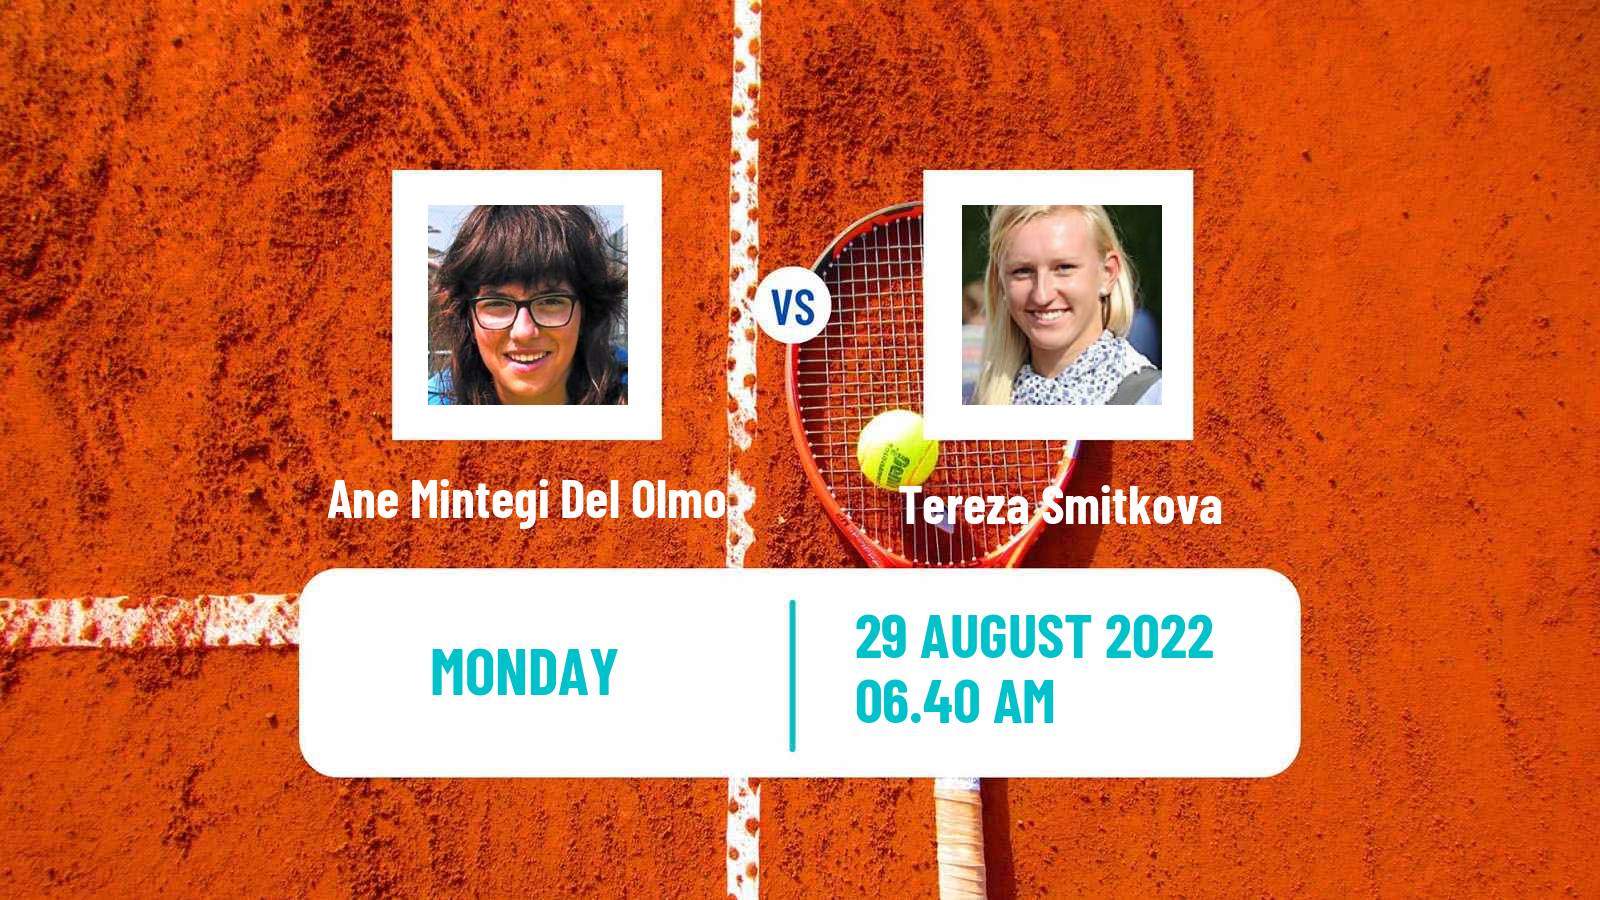 Tennis ITF Tournaments Ane Mintegi Del Olmo - Tereza Smitkova